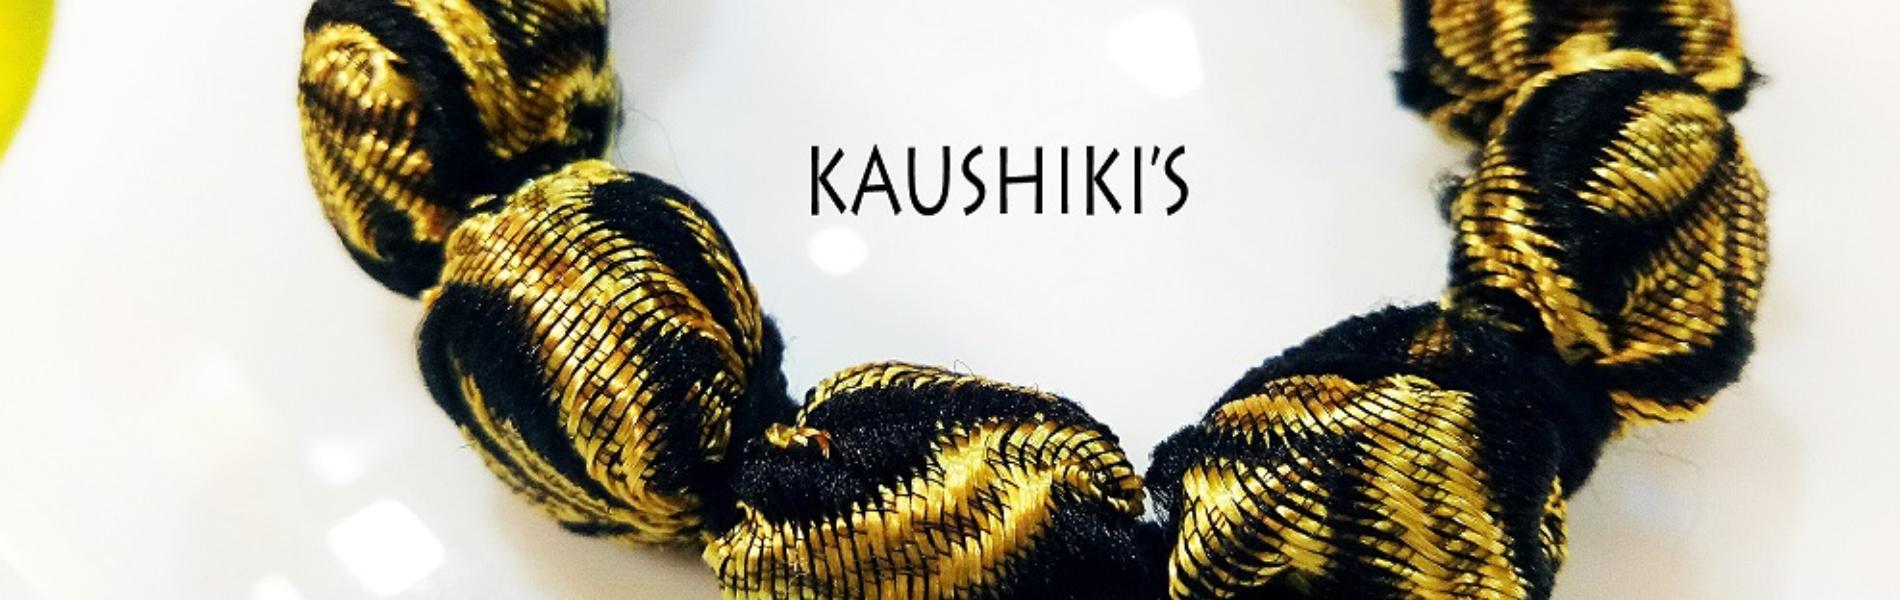 Kaushiki's